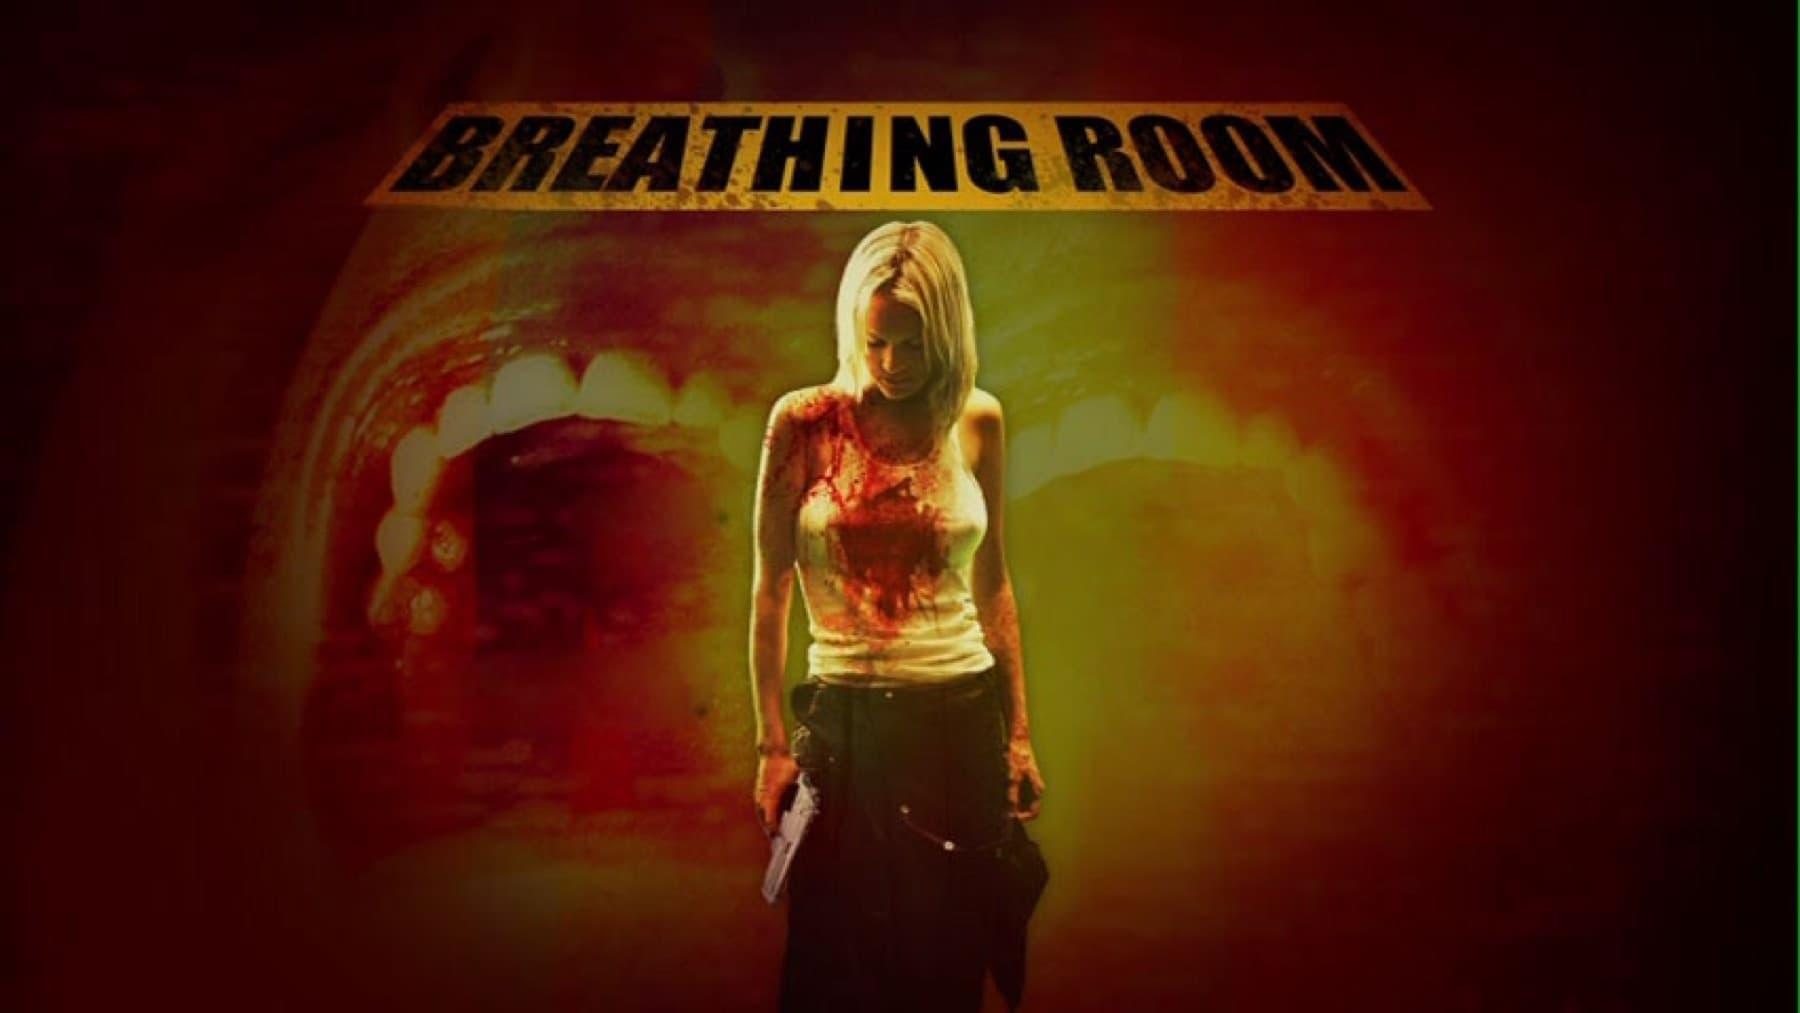 Breathing Room backdrop